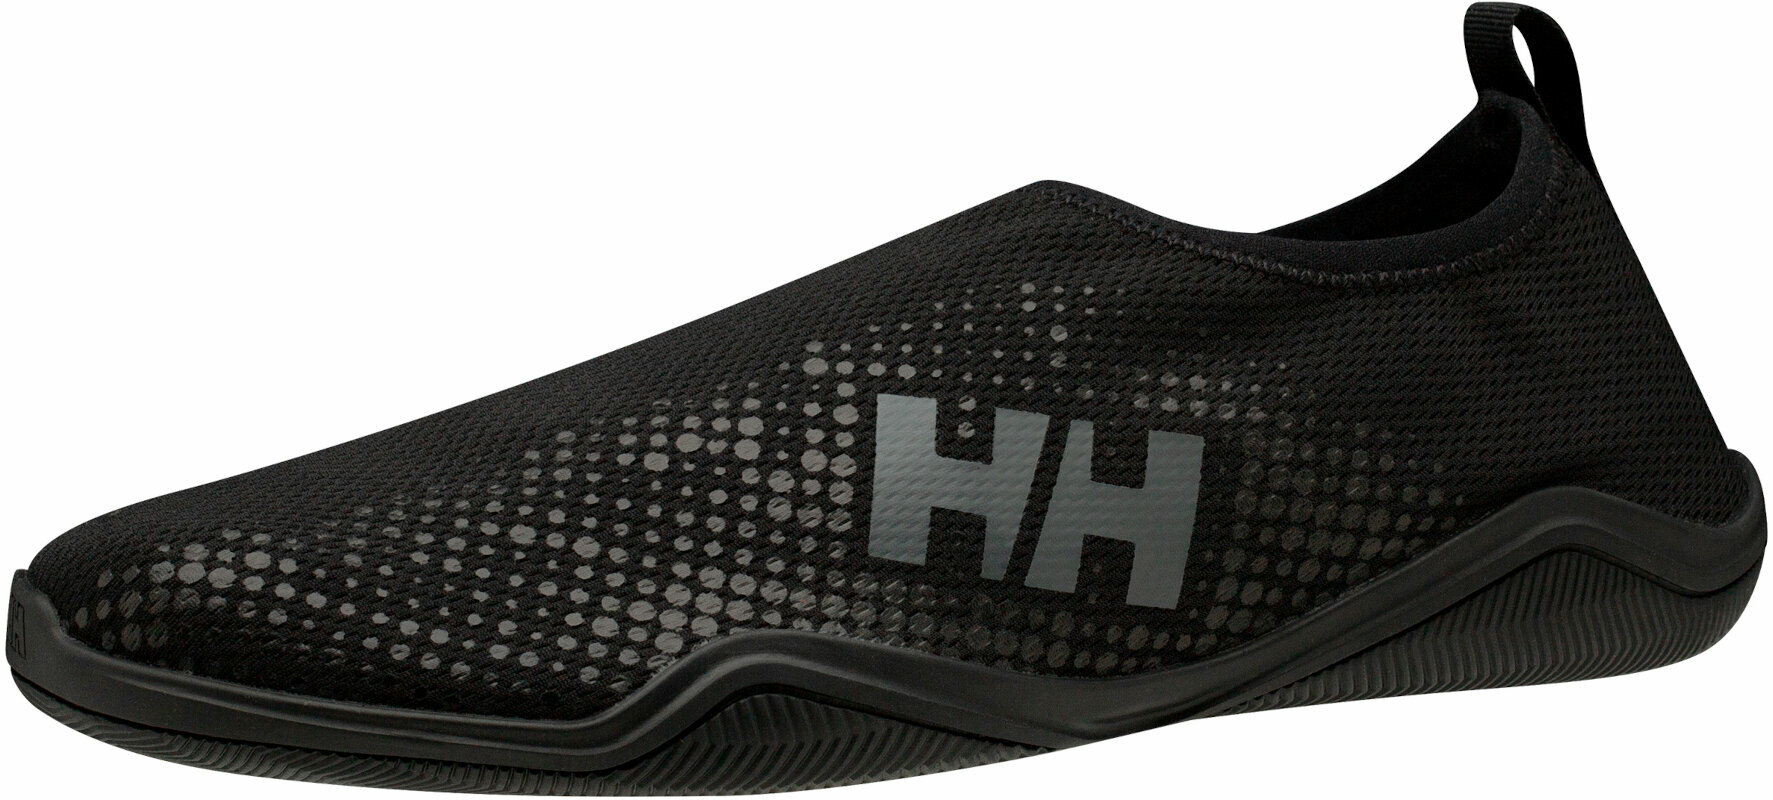 Jachtařská obuv Helly Hansen Men's Crest Watermoc Black/Charcoal 40,5